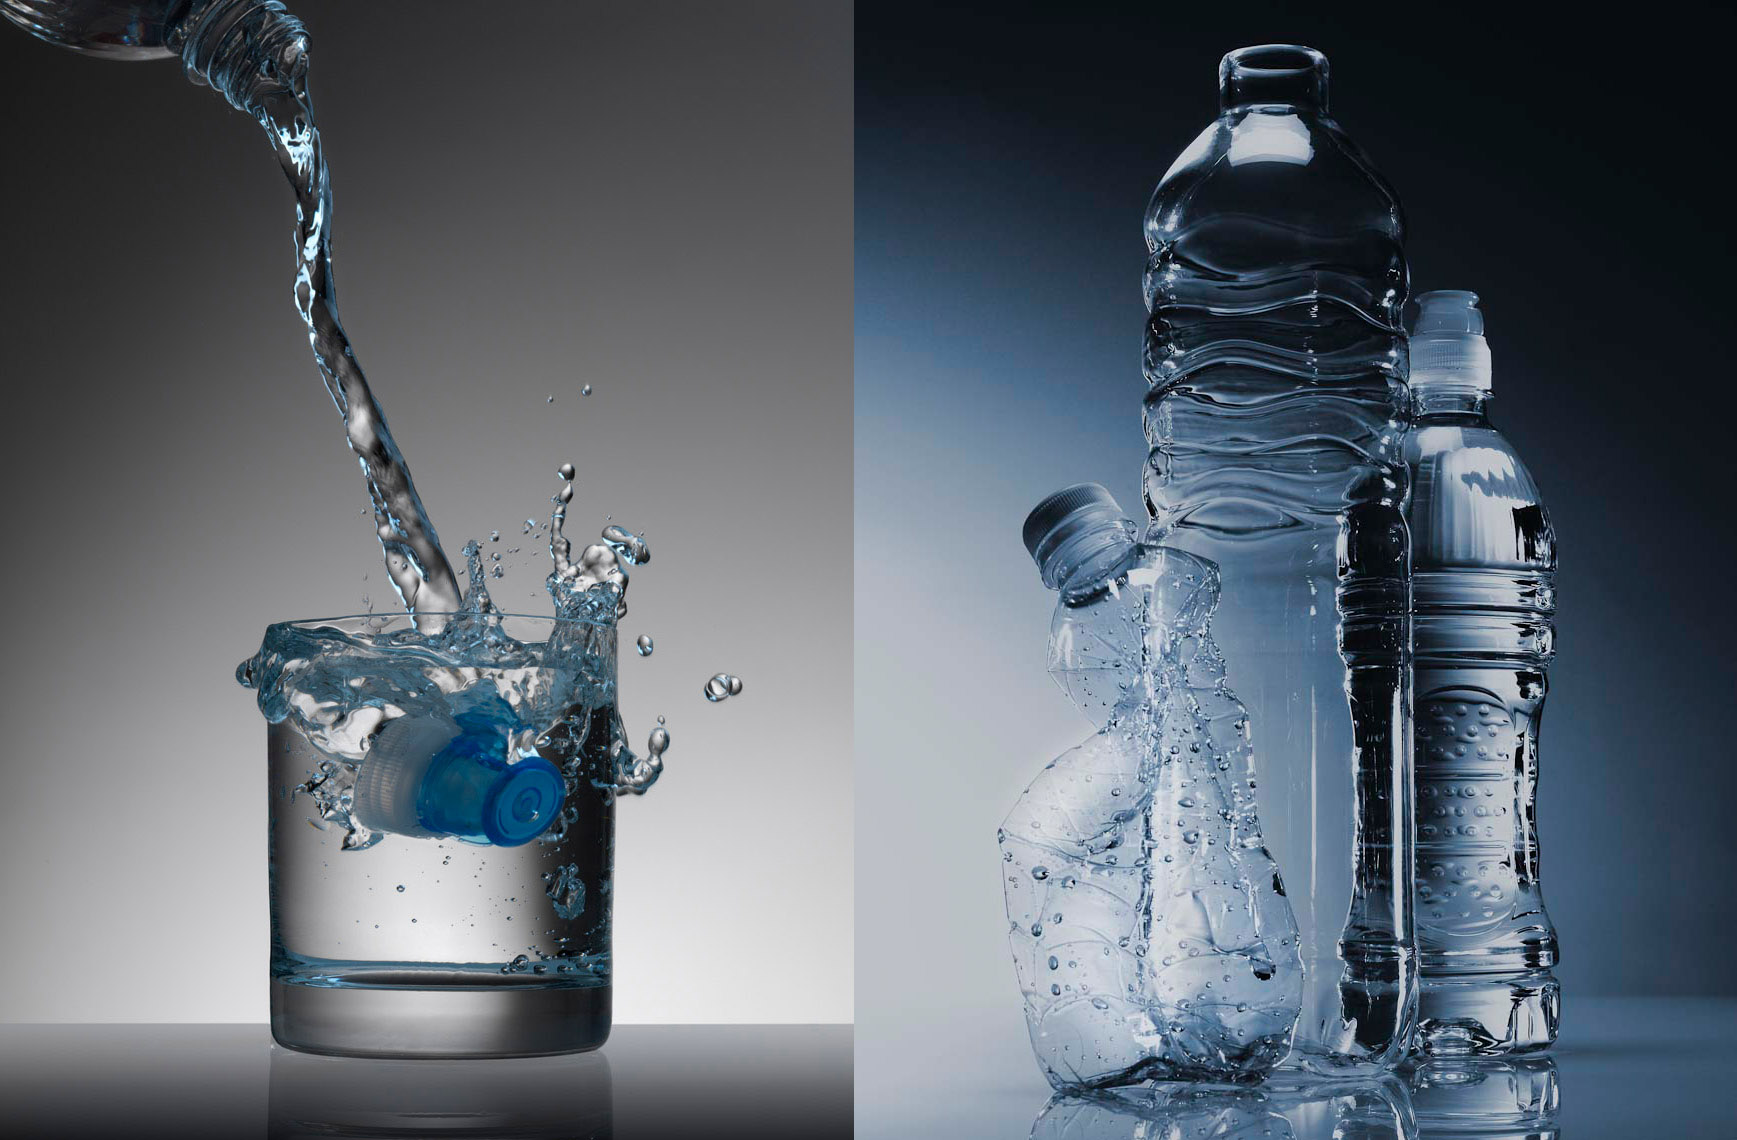 Beverage Still Life, Water Splashing in Drinking Glass